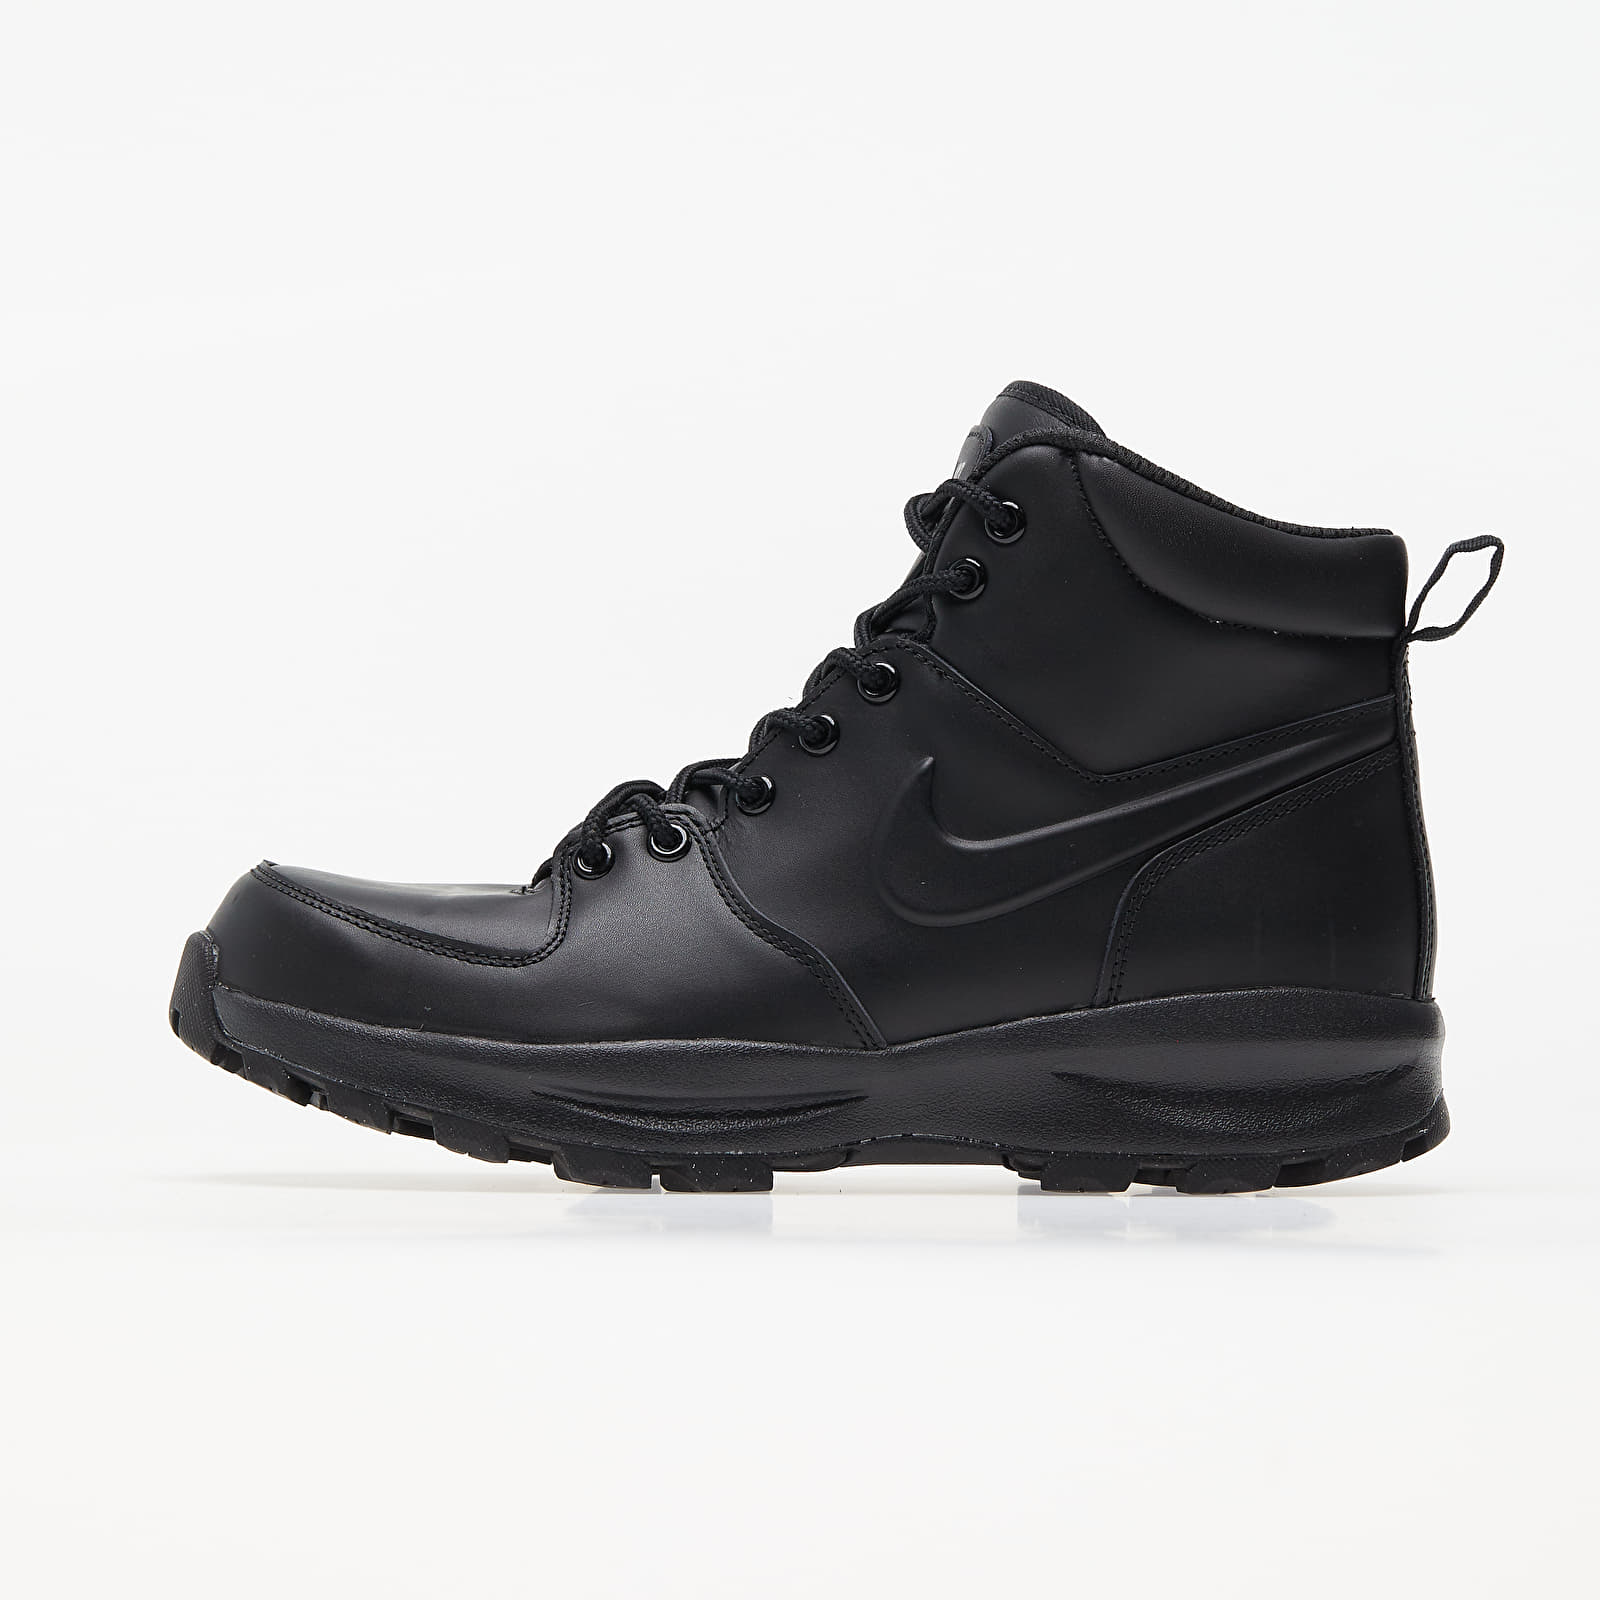 Chaussures et baskets homme Nike Manoa Leather Black/ Black-Black